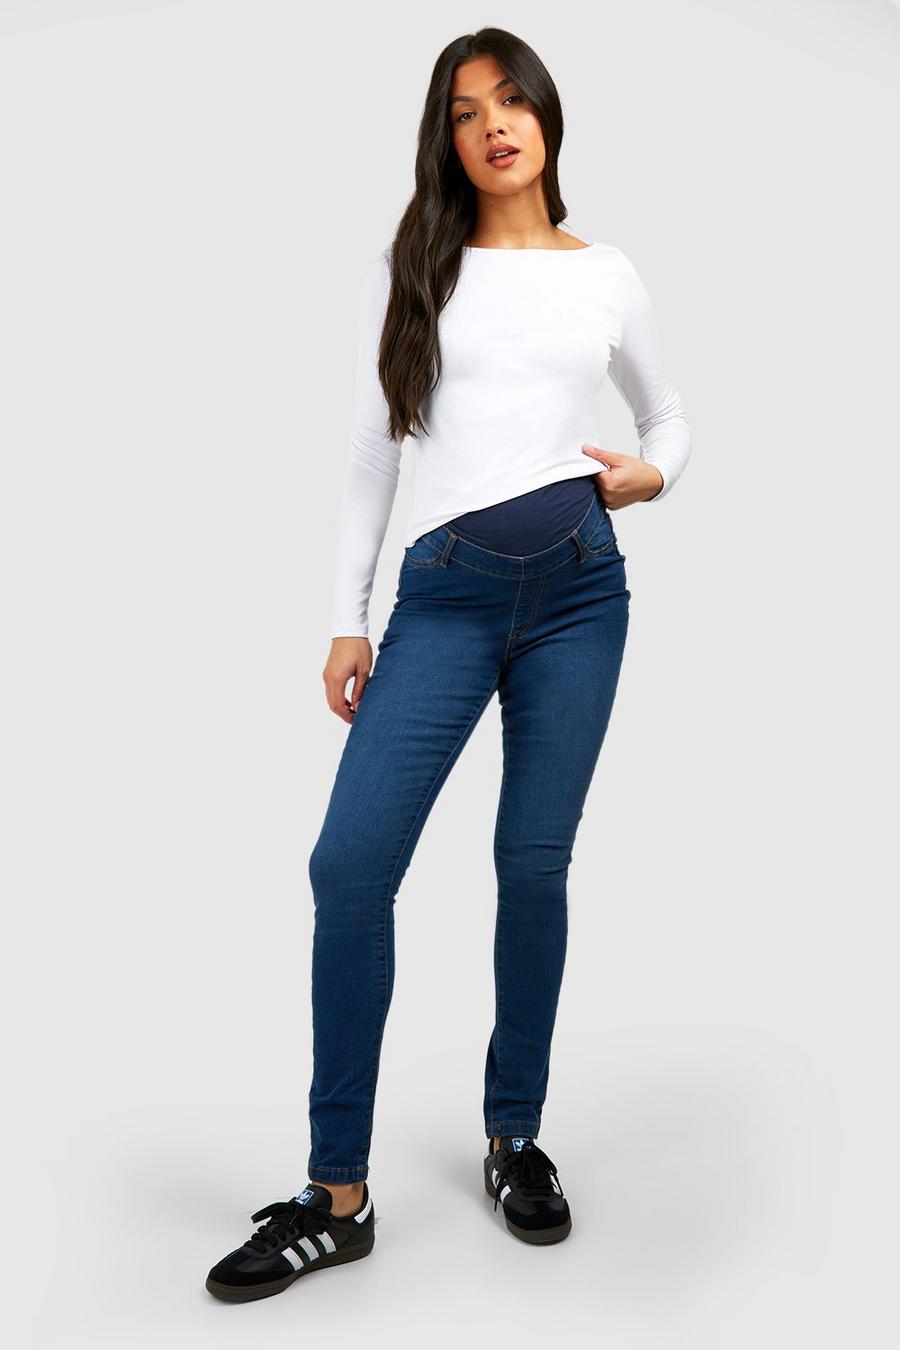 V VOCNI Maternity Jeans Skinny Distressed Denim Stretch Slim Jeggings  Underbelly Pregnancy Pants 55-Light Blue Small at  Women's Clothing  store